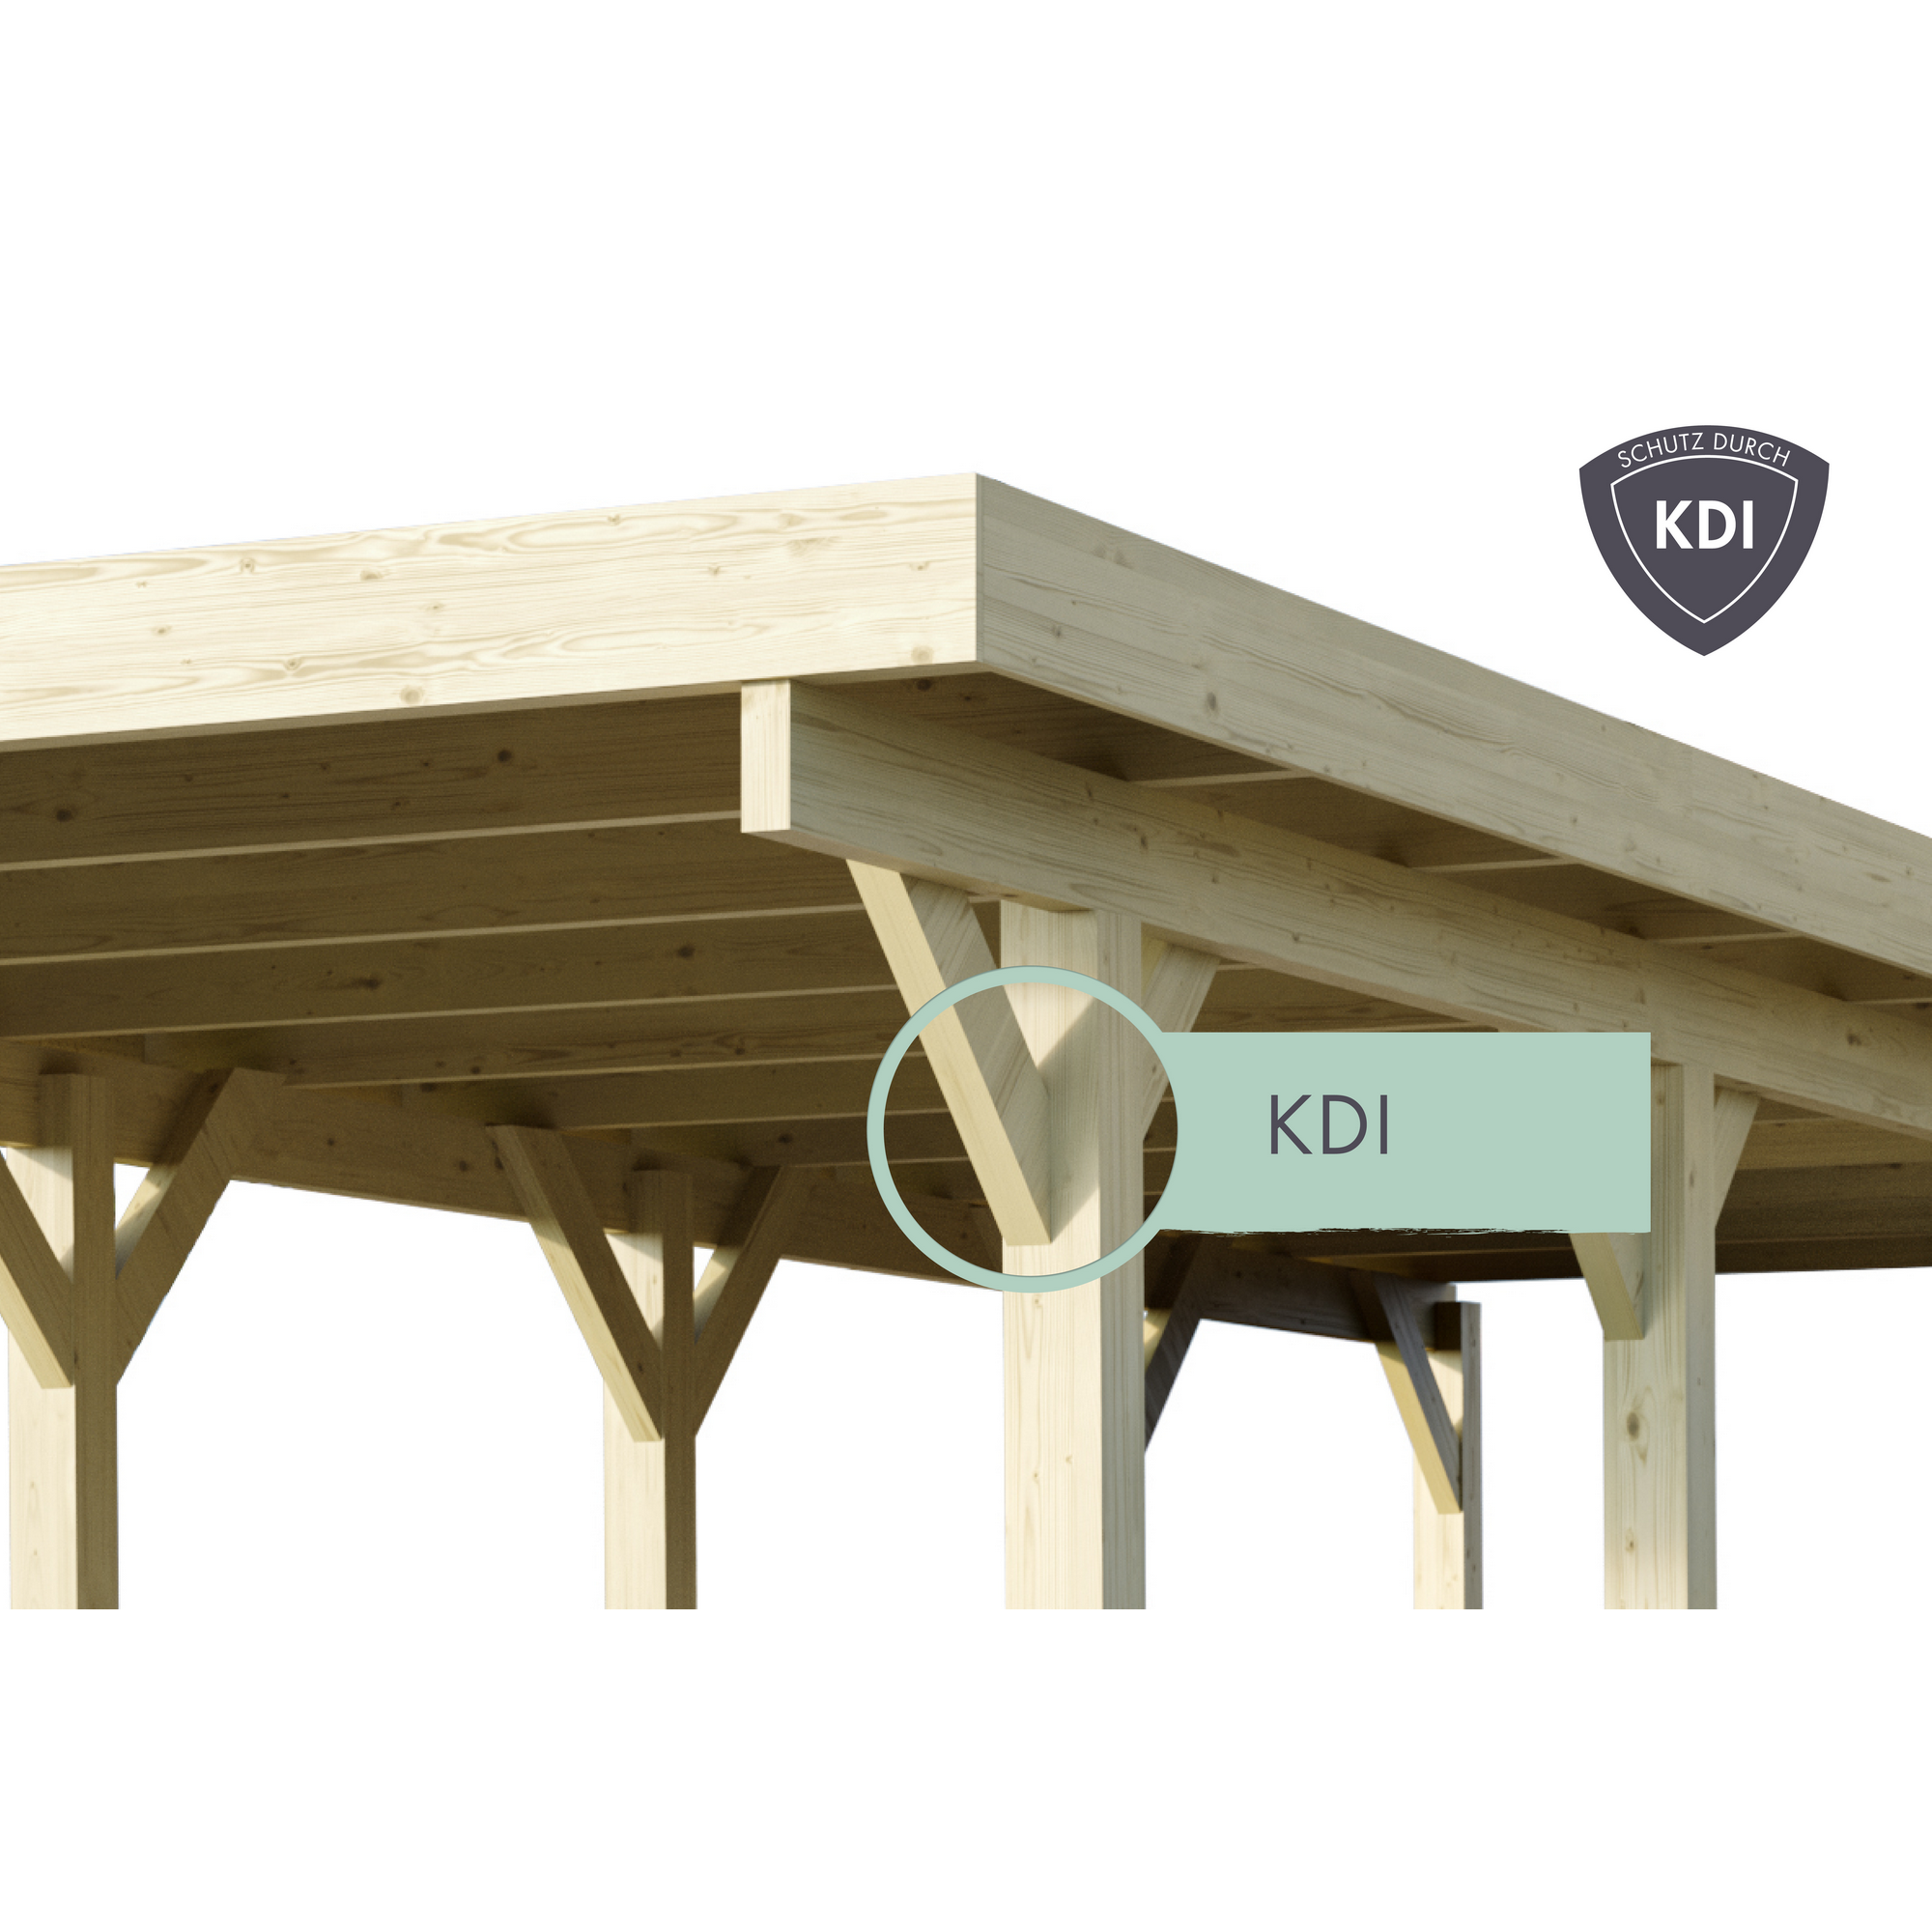 Doppelcarport 'Carlos 2' Kiefer PVC-Dach mit einem Einfahrtsbogen 670 x 598 x 237 cm + product picture